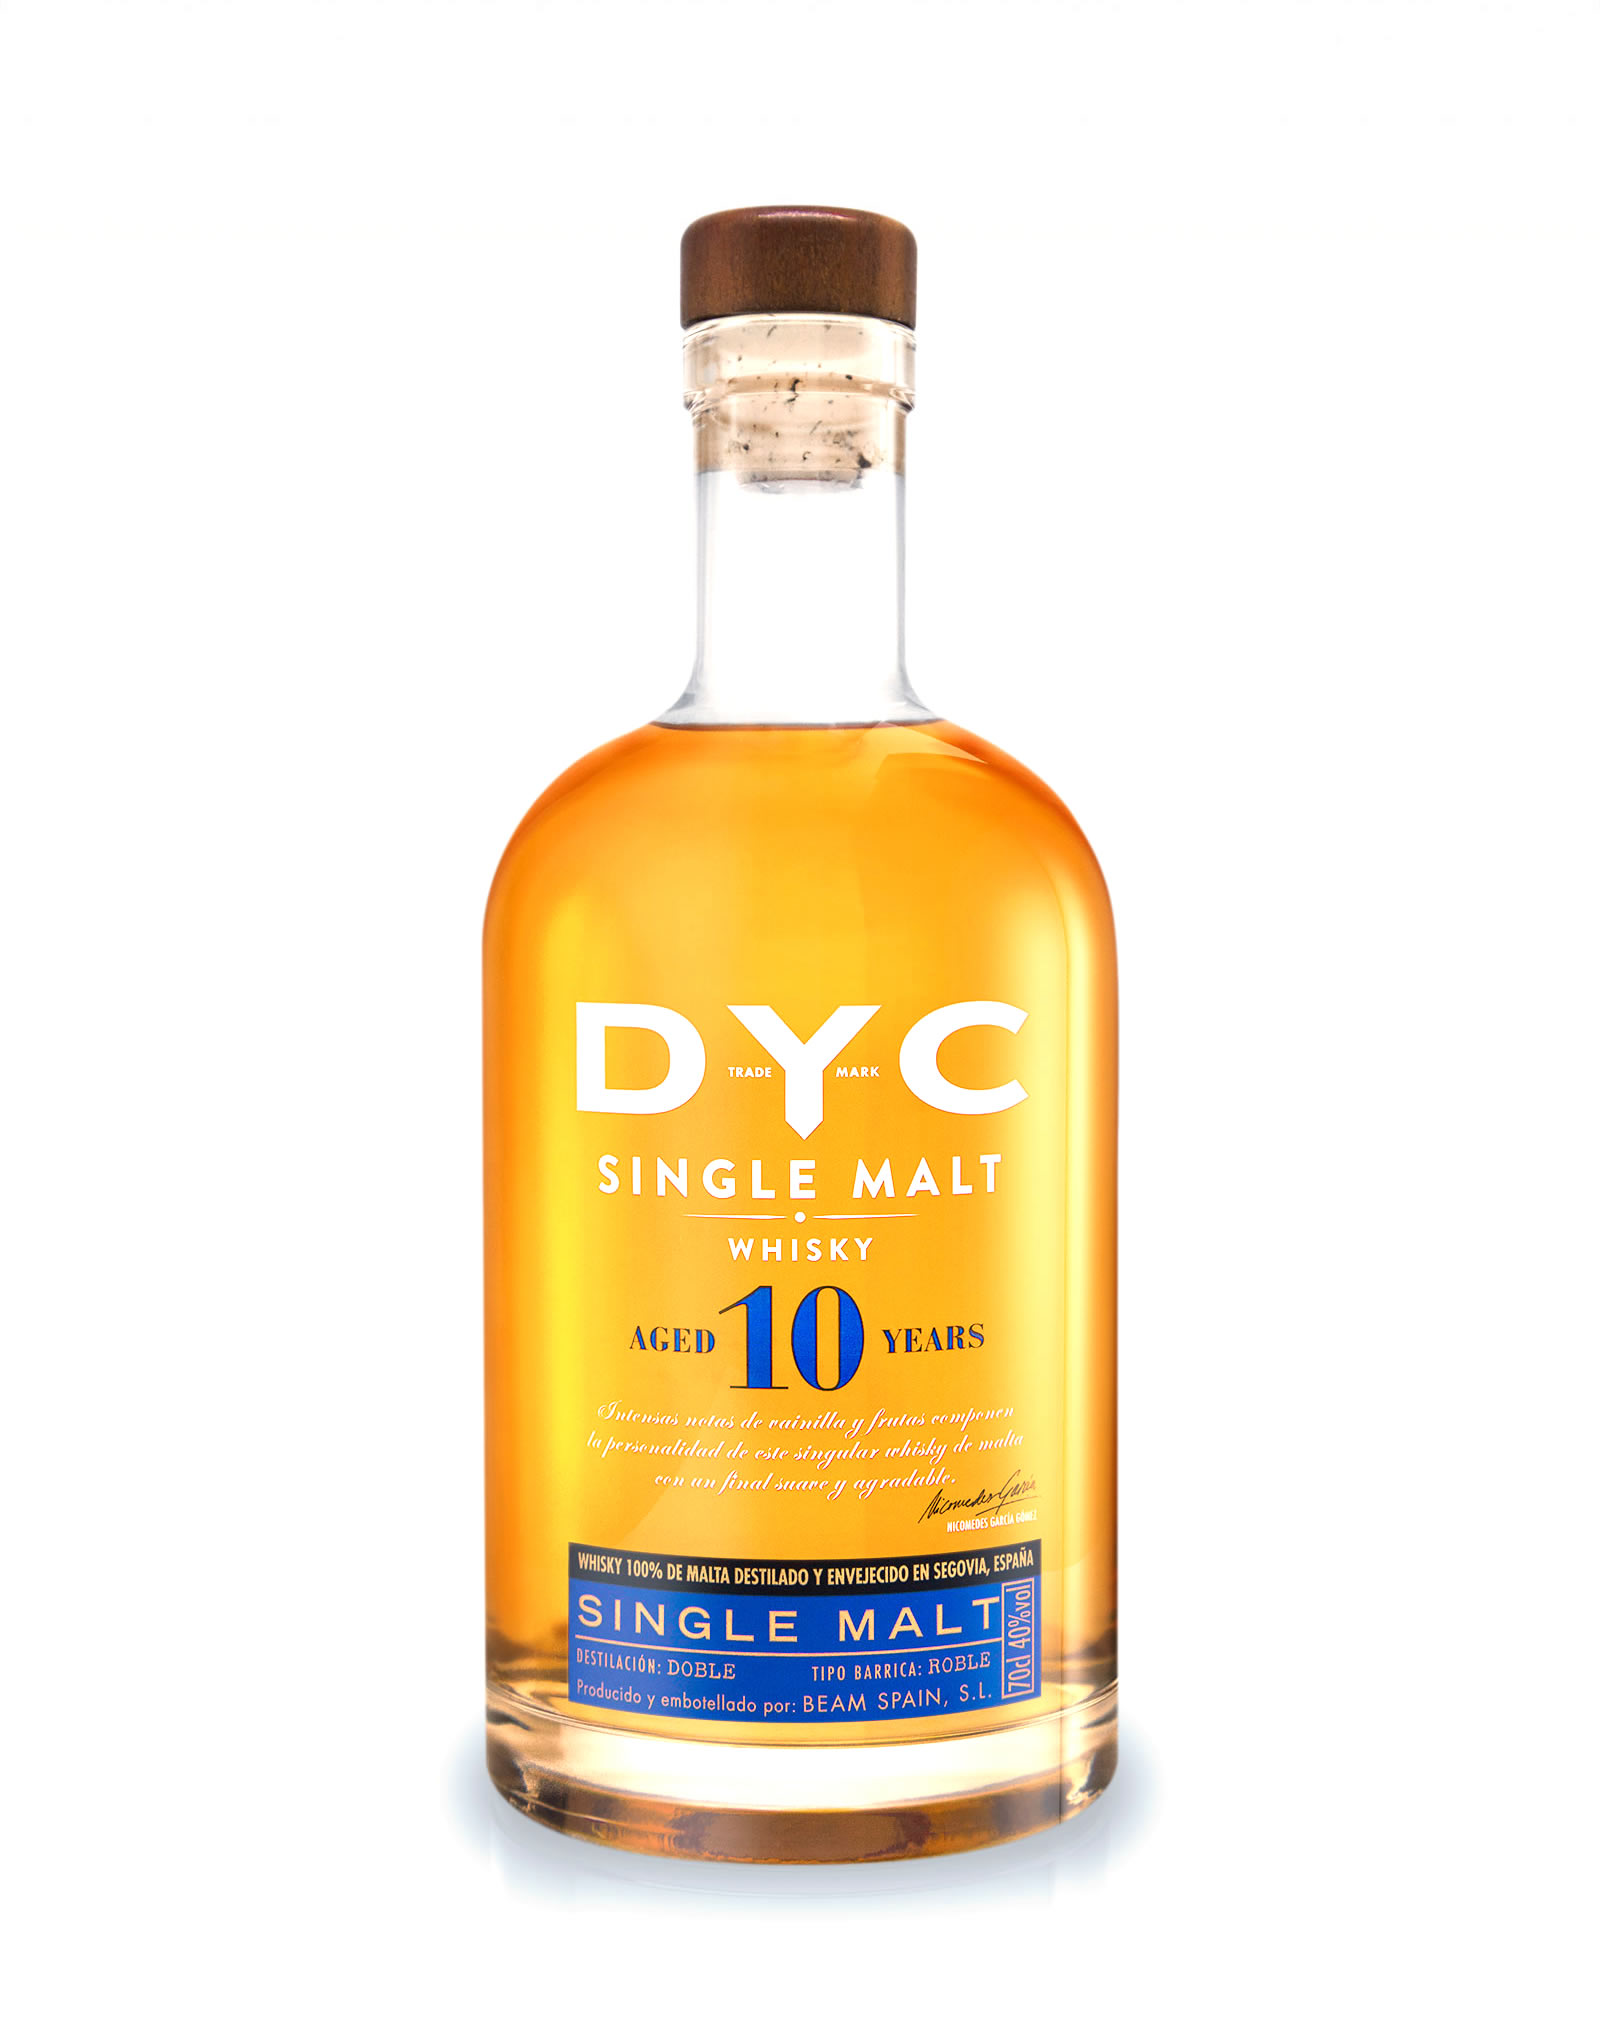 Comprar Whisky DYC Single Malt 10 Años 】 barato online🍷